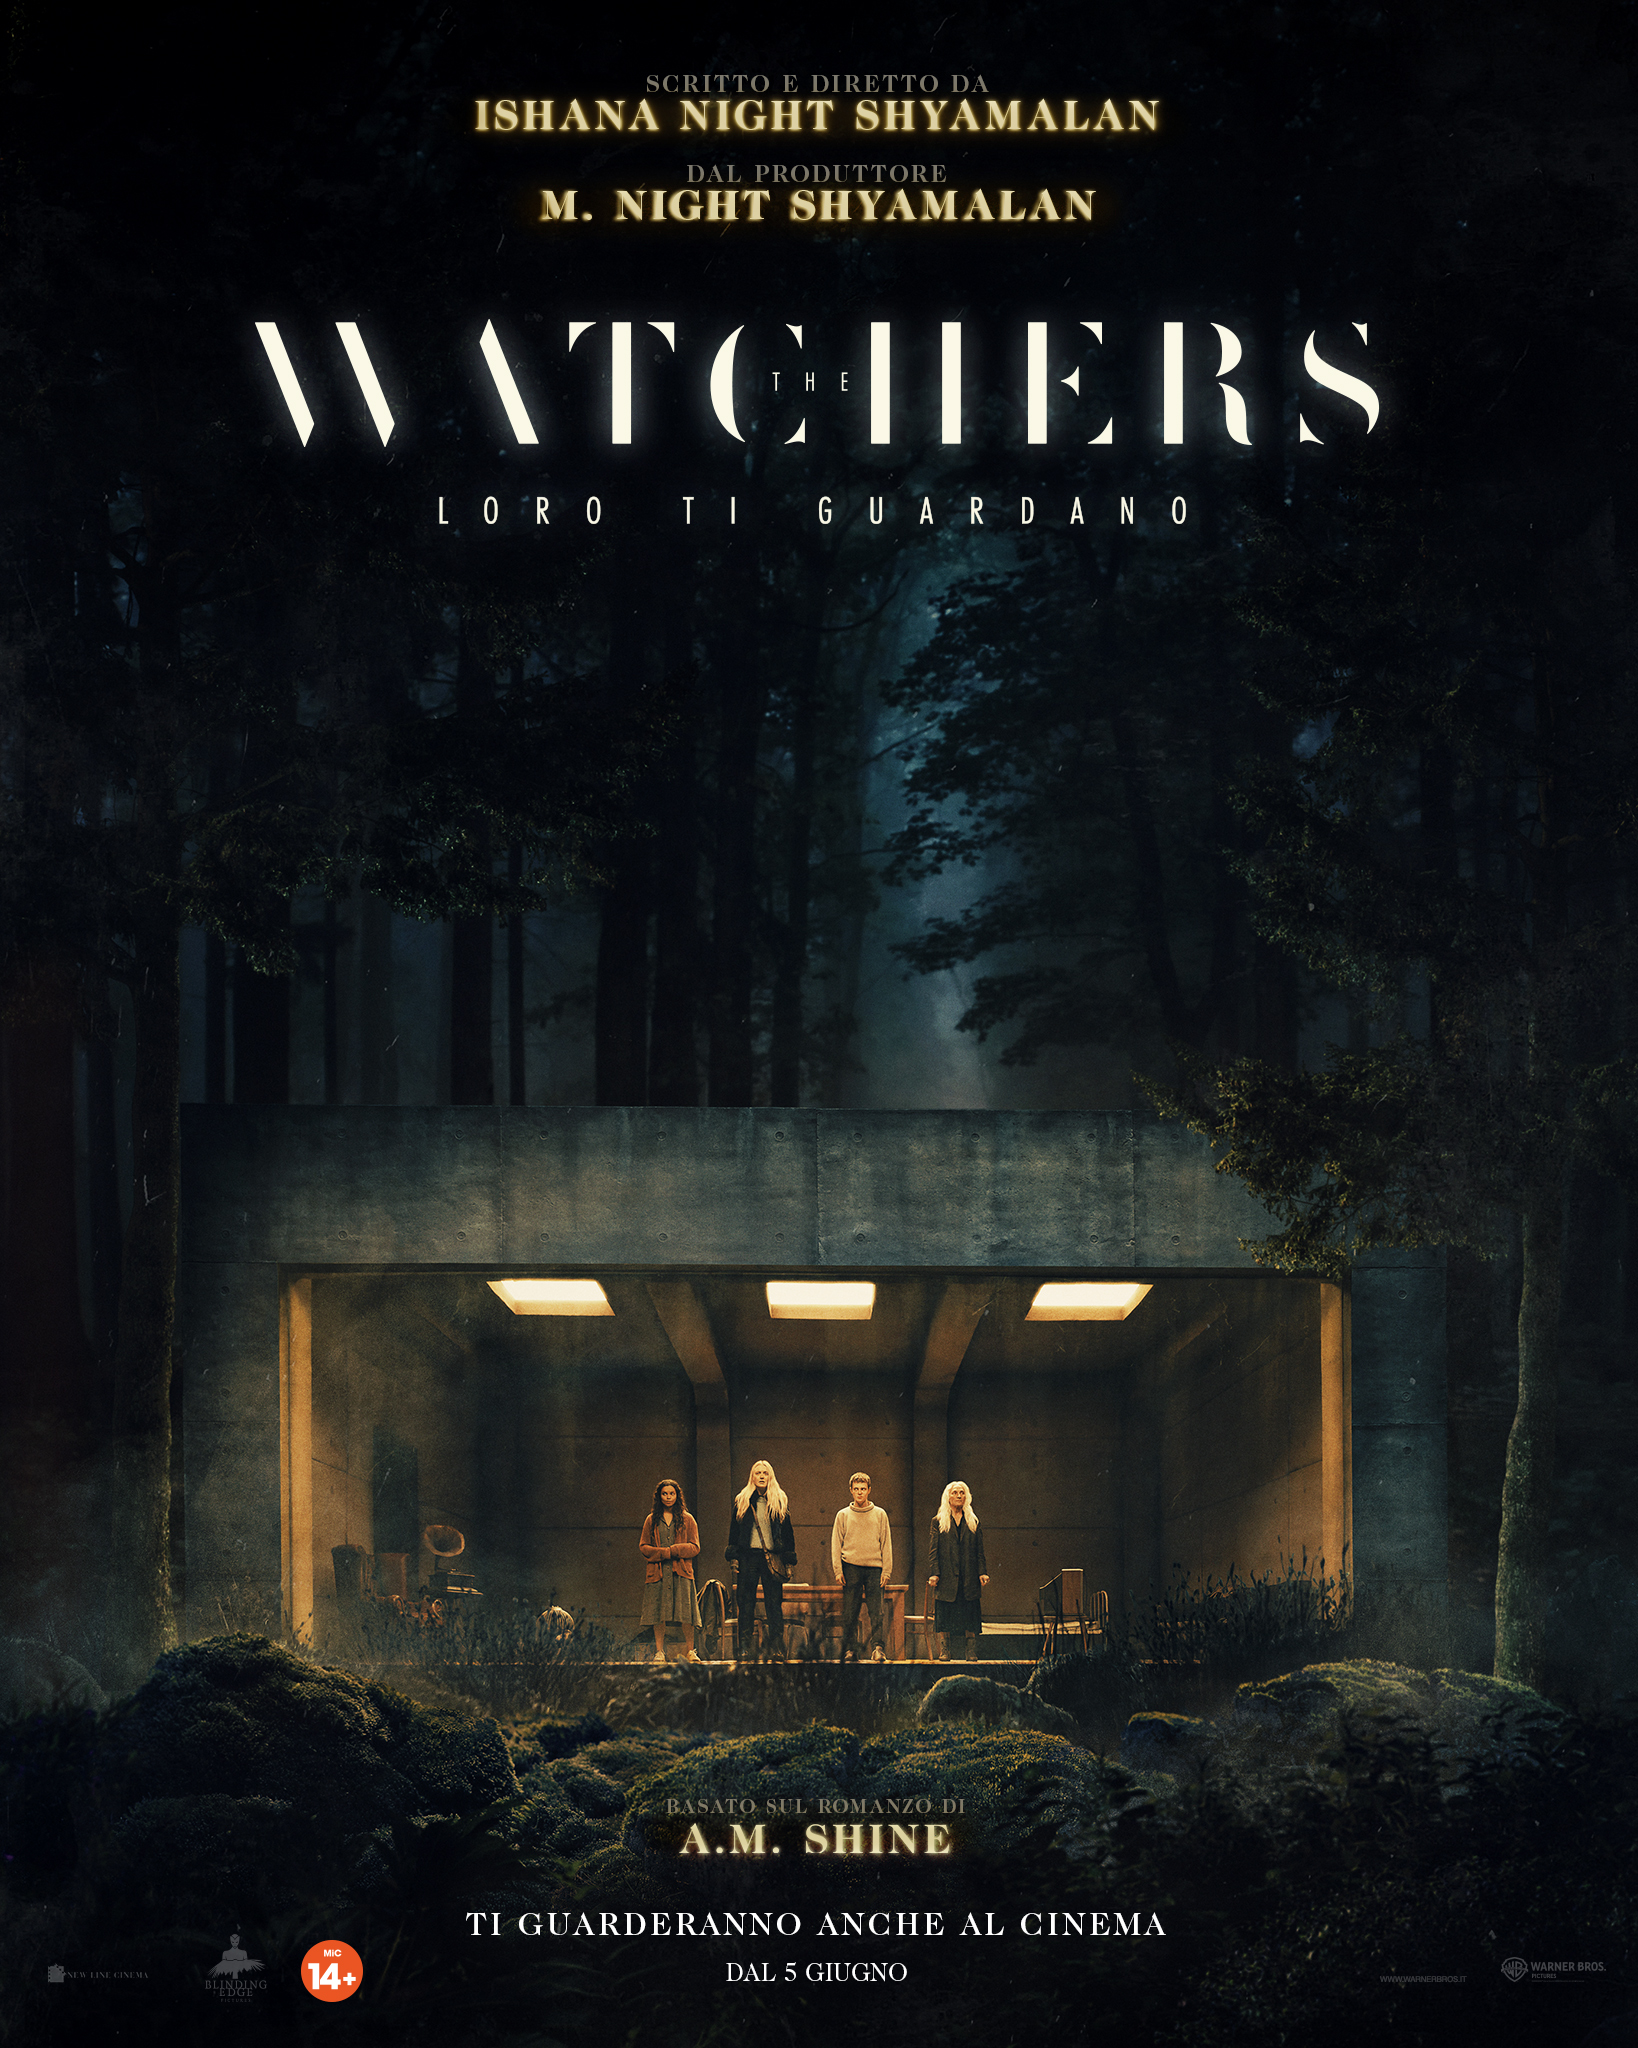 The Watchers: il nuovo trailer dell’horror di Ishana Shyamalan